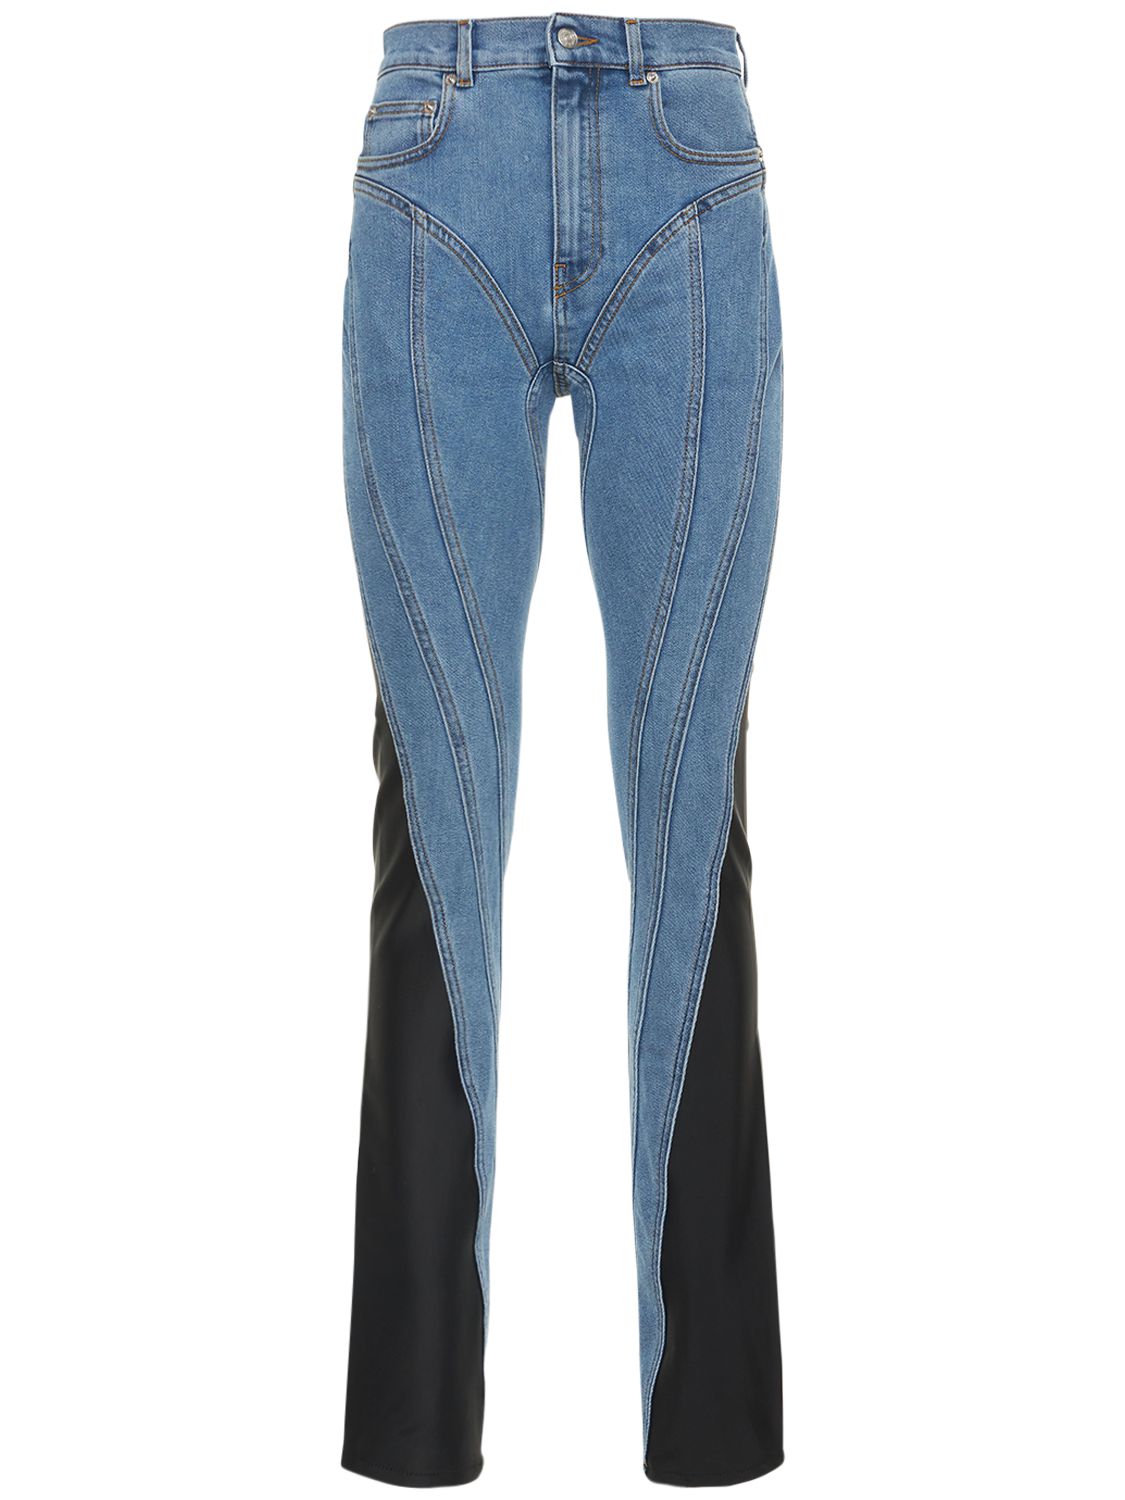 Contrast Denim & Jersey Skinny Jeans